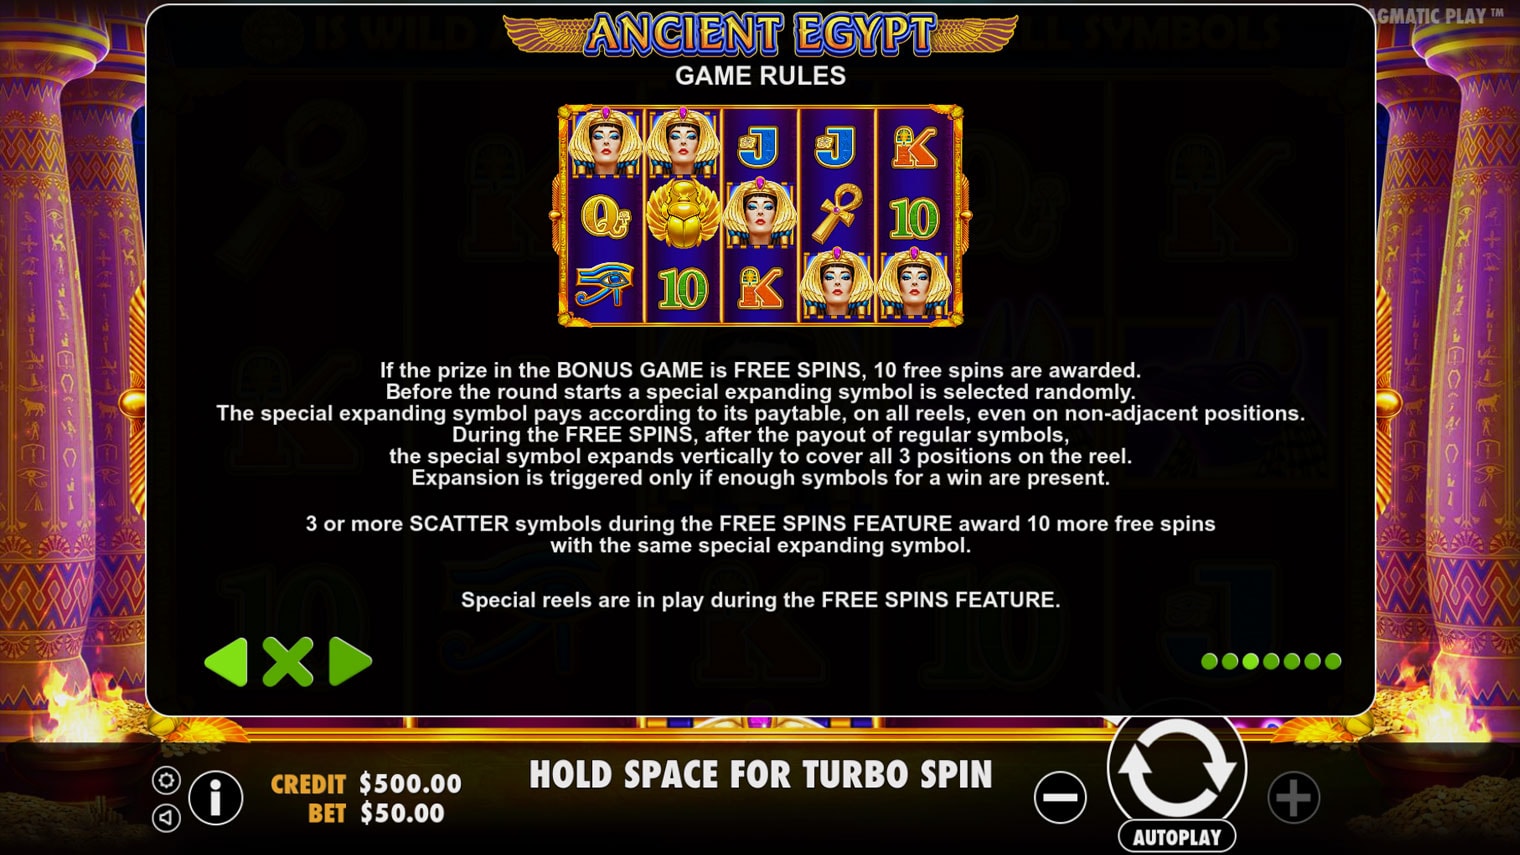 Vegas crest online casino